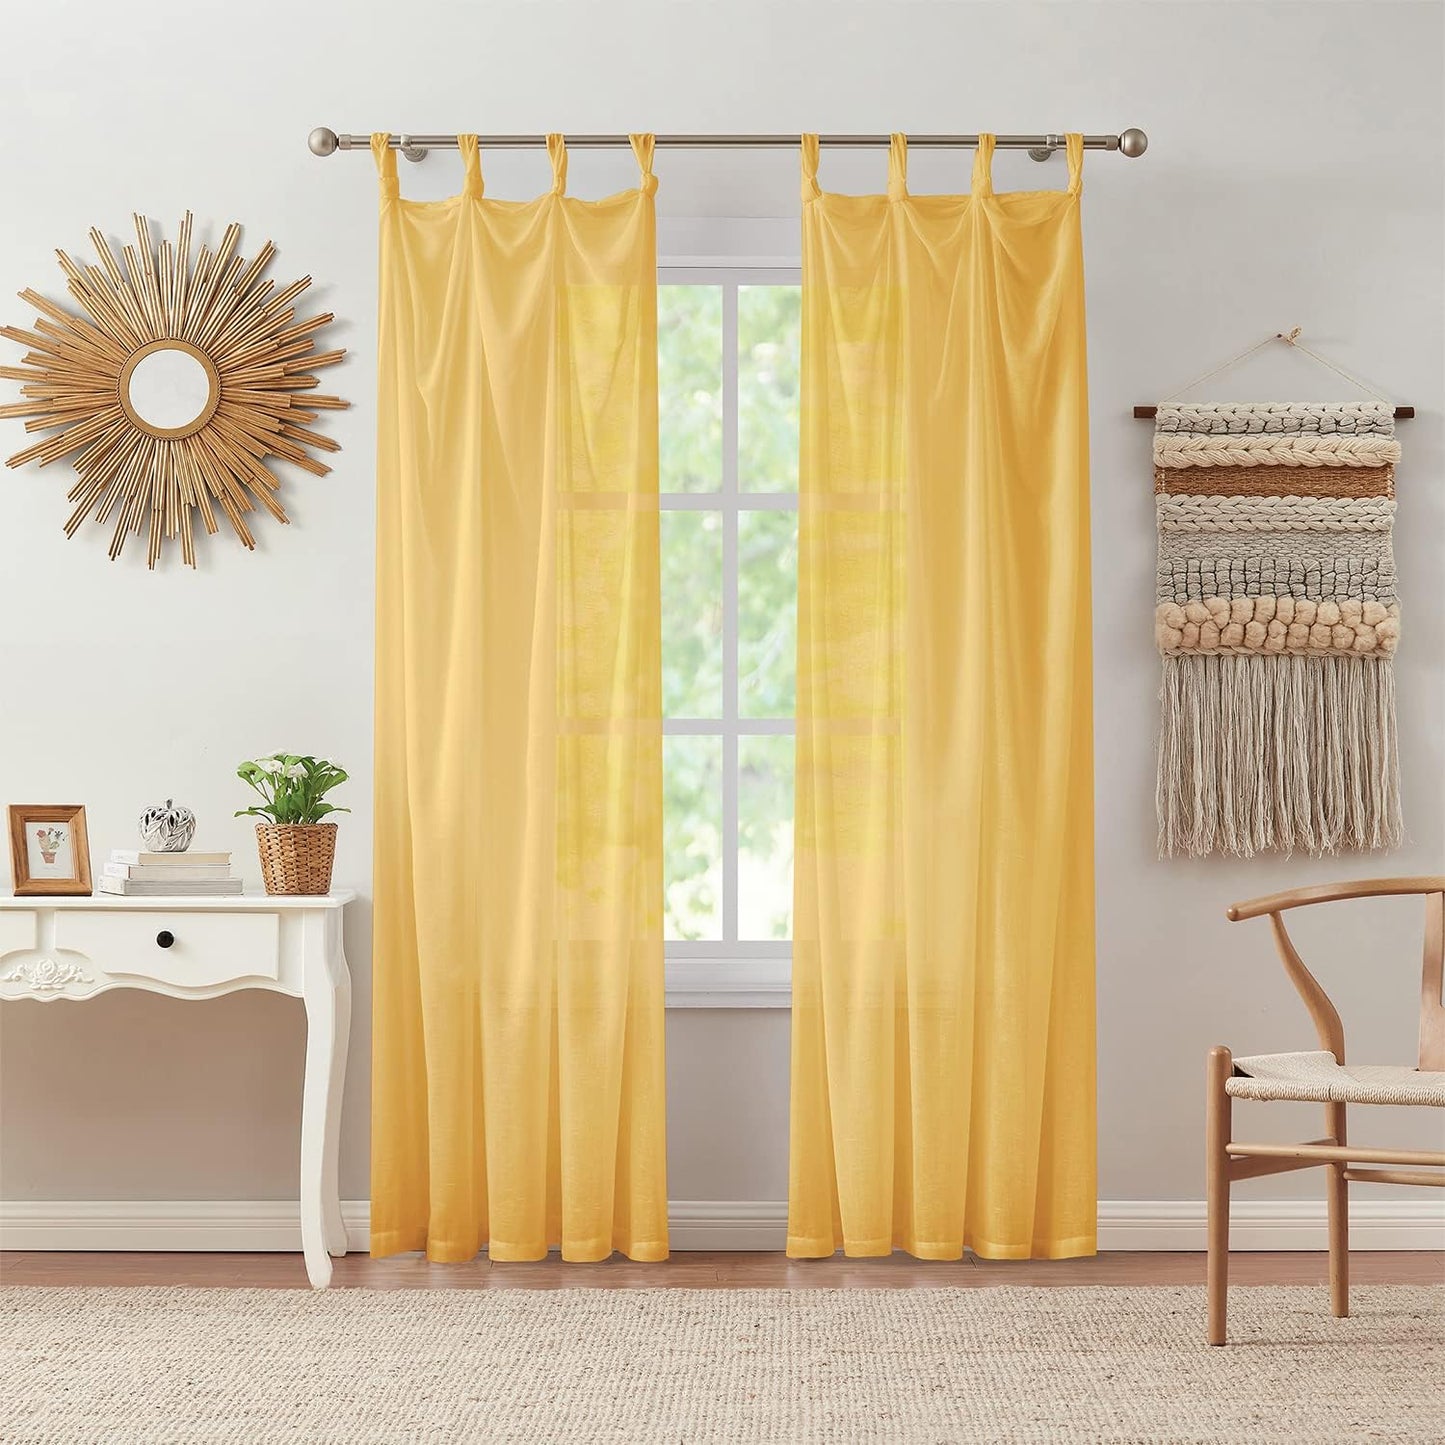 Indigo Ink - Window Curtain, Gauzy Knotted Tie Top Sheer Curtain Panel, Boho Home Decor (Mia White, 70" X 95")  Victoria Classics Mia Yellow 70" X 84" 